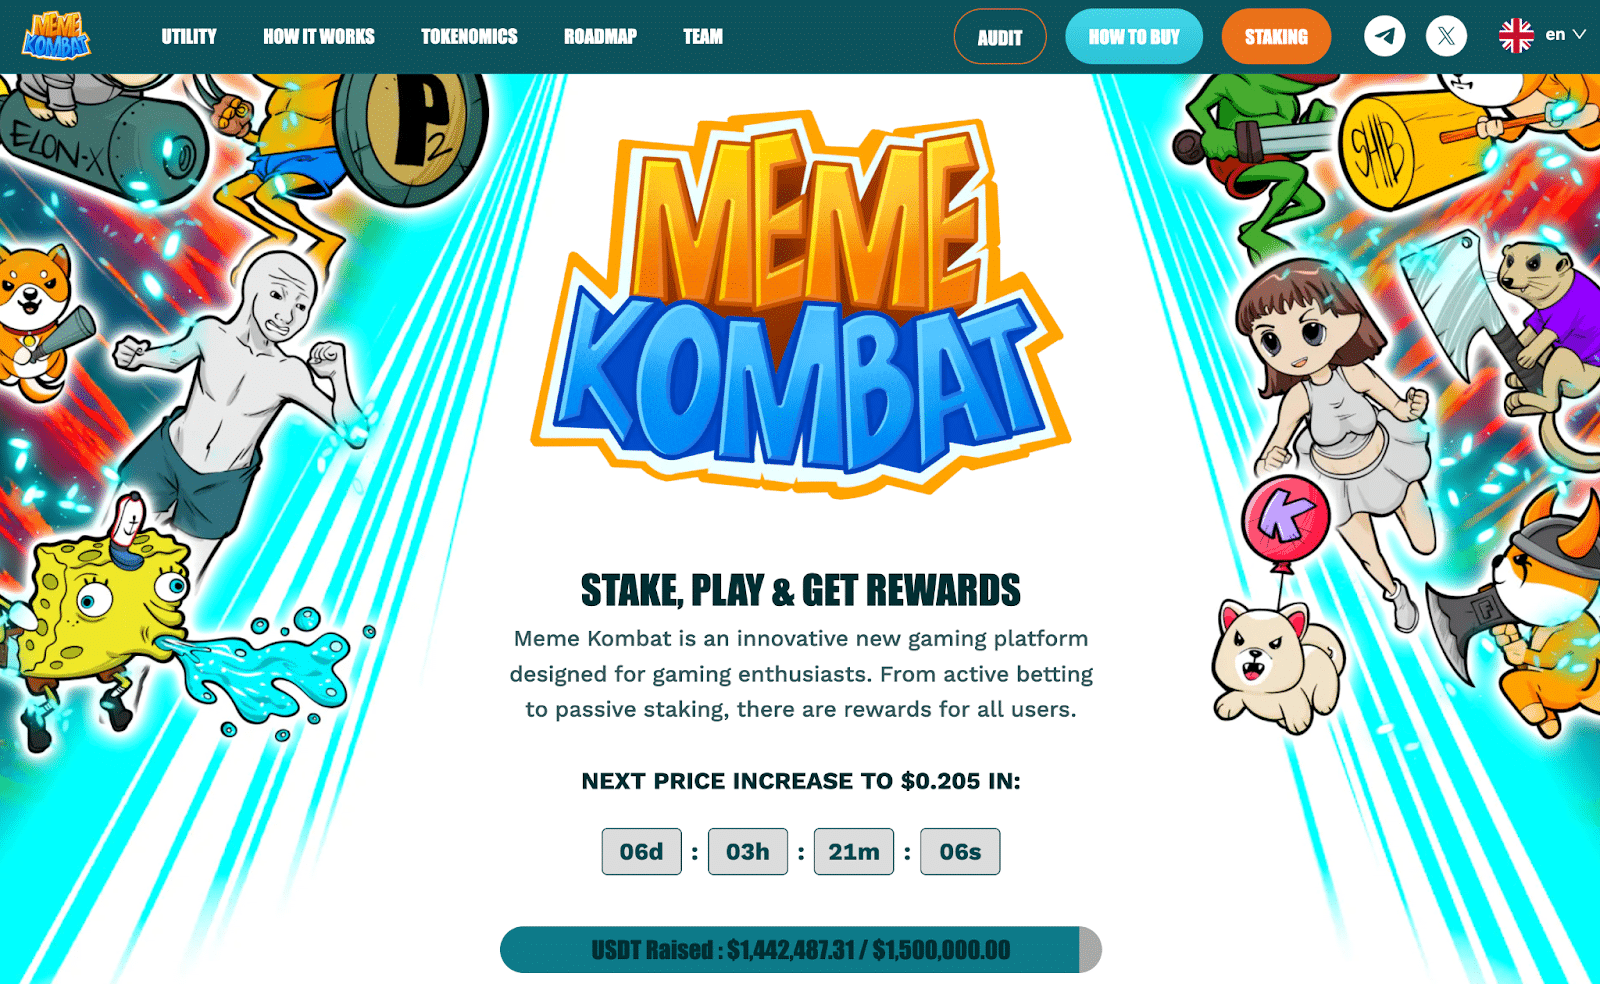 GA黄金甲Pepe币价格上涨25%Meme Kombat在独特的游戏平台上筹集了近150万美元　也许会有100倍的增加